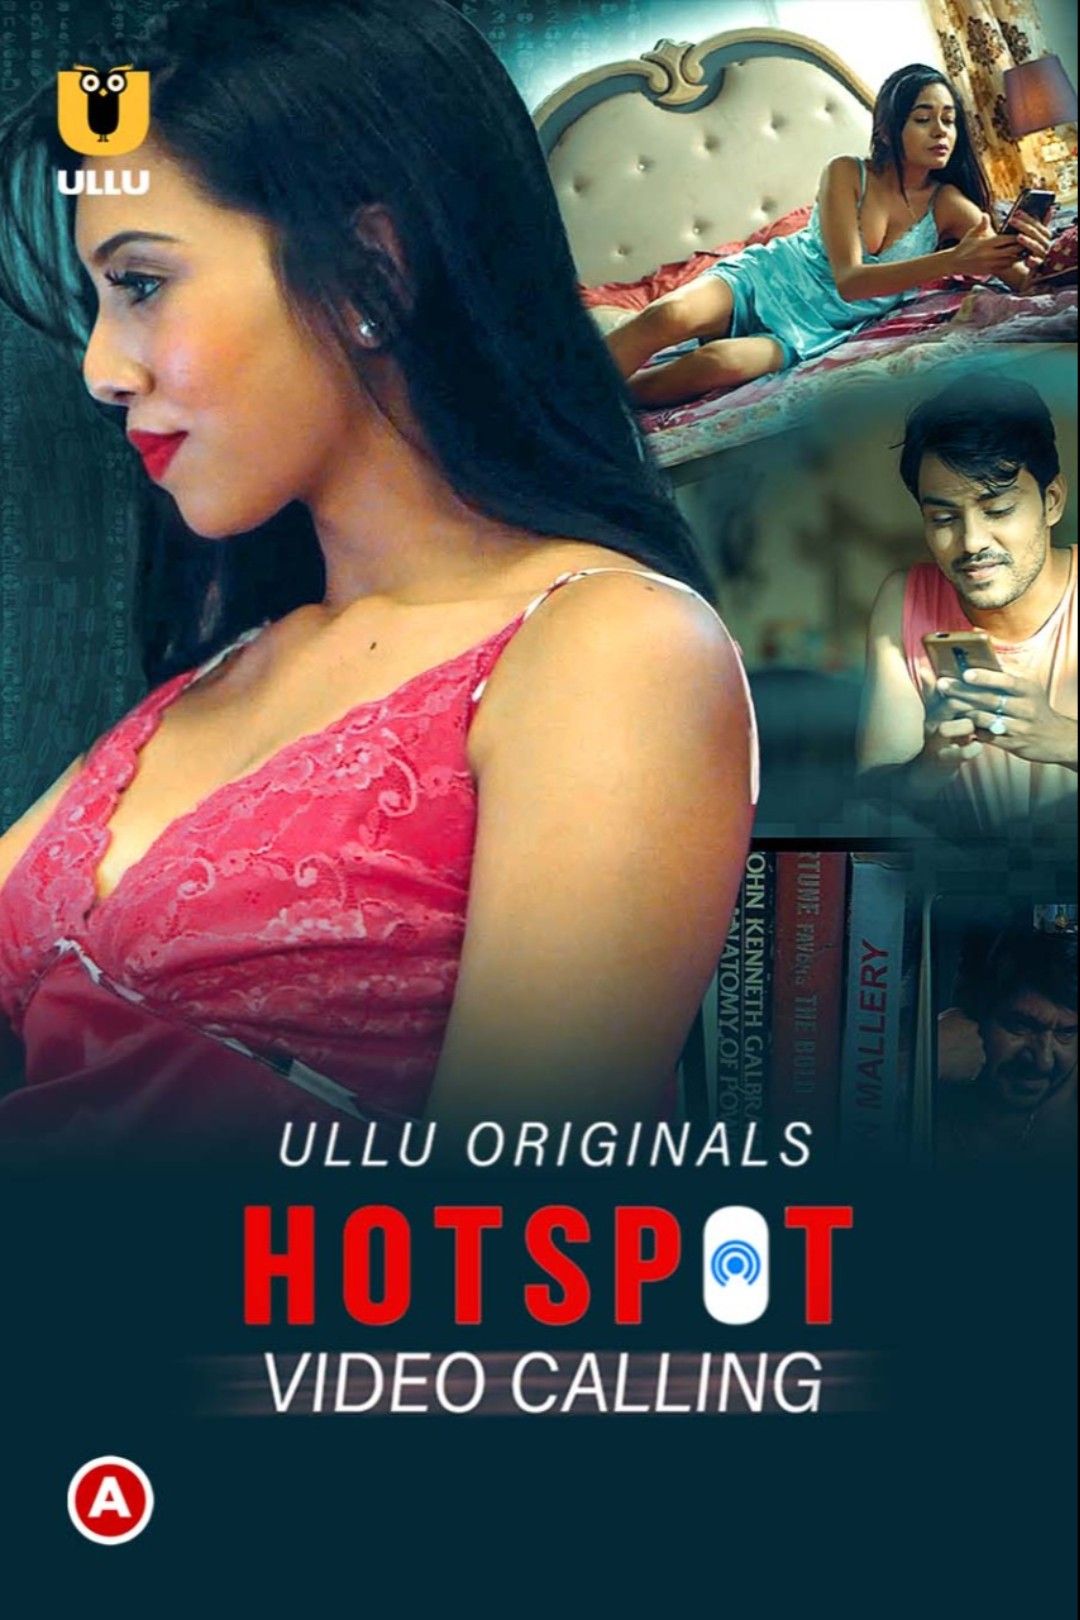 Hotspot (Video Calling) 2021 Hindi S01 ULLU Hindi Web Series download full movie